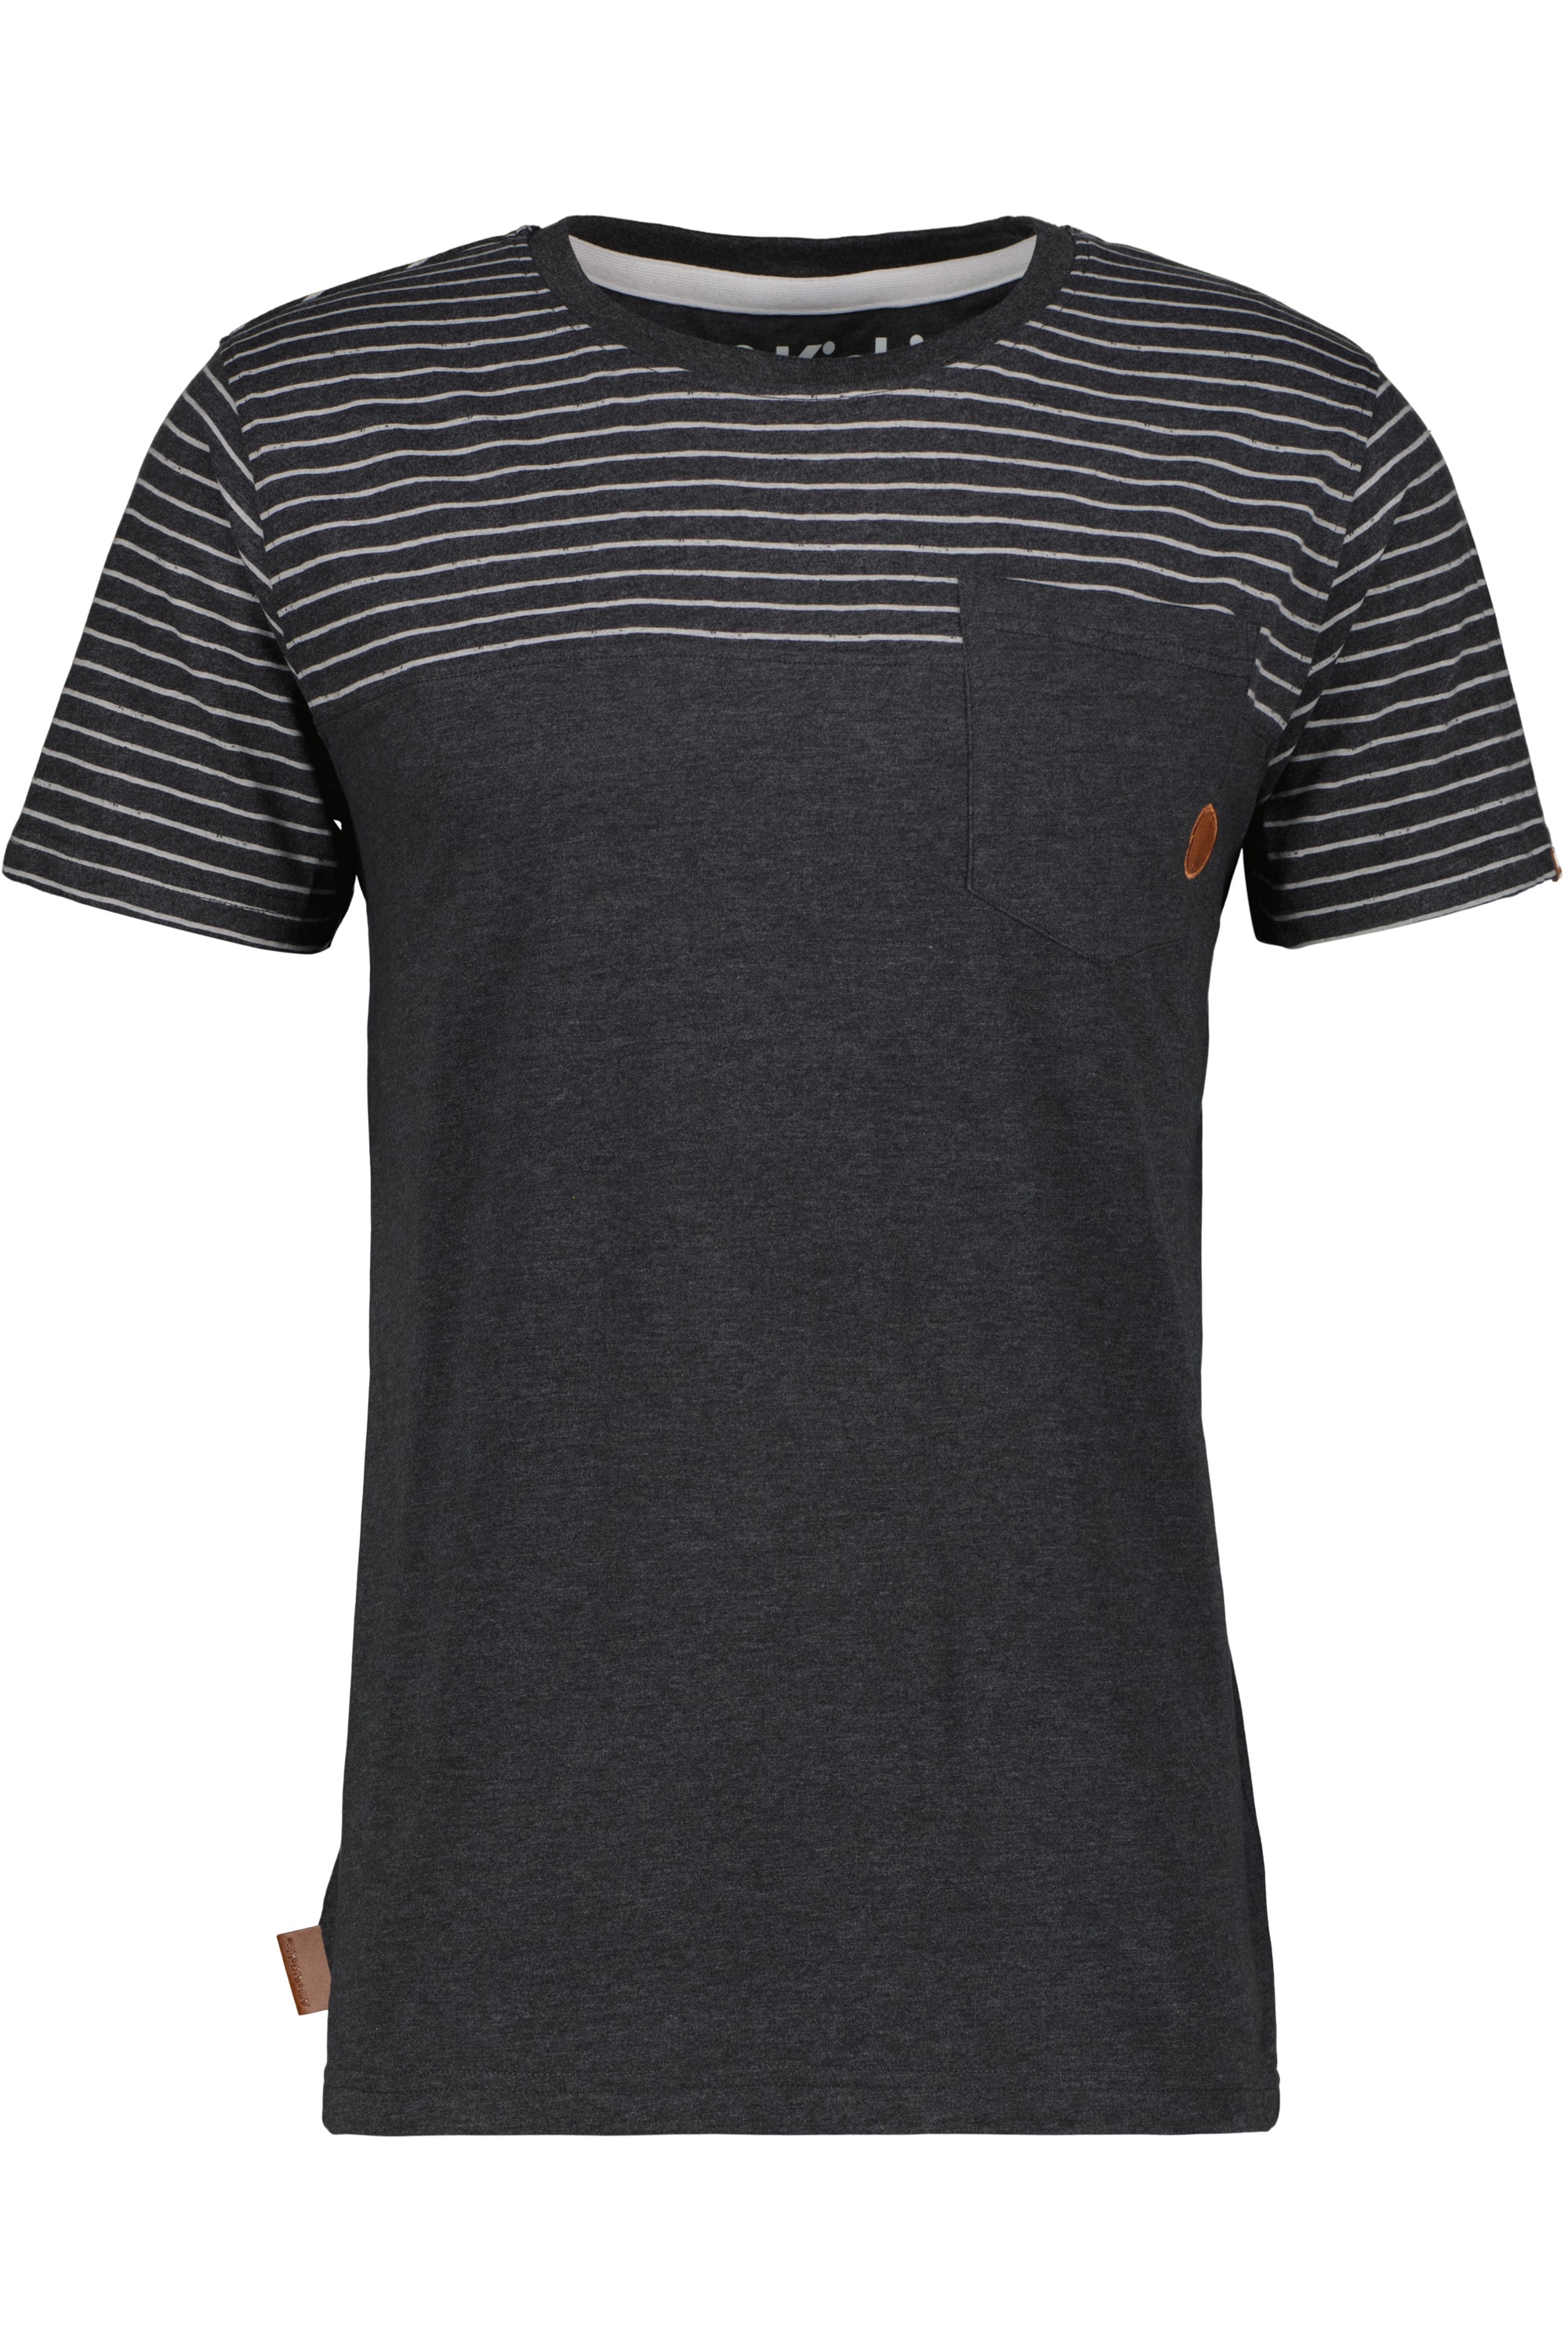 Alife & Kickin T-Shirt »LeopoldAK Shirt Herren T-Shirt«